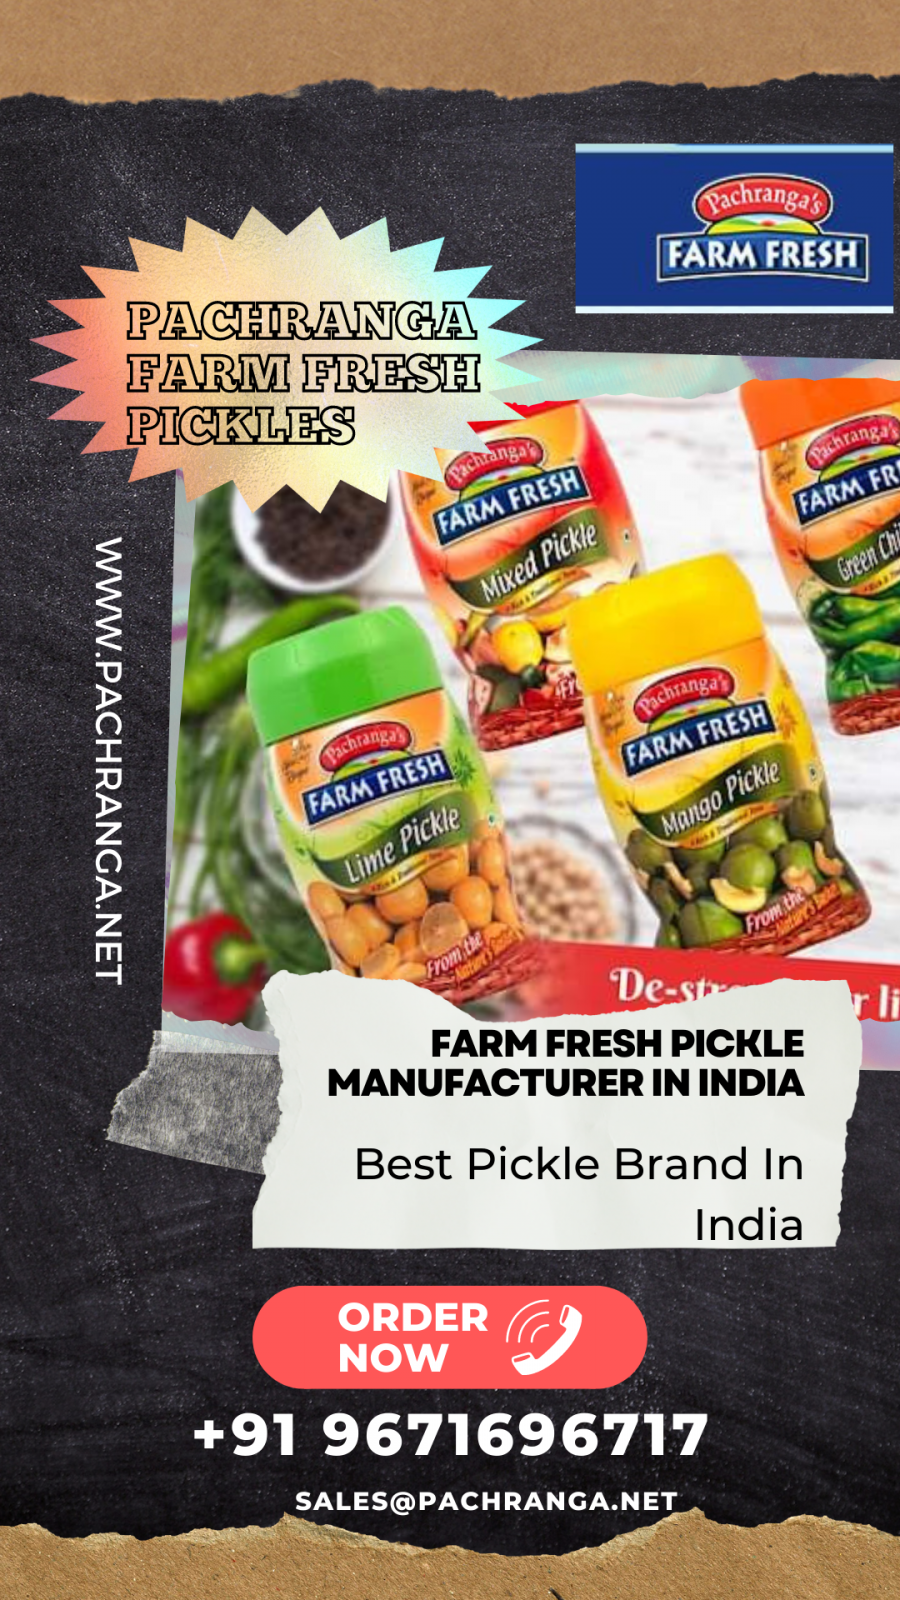 Pachranga Farm Fresh Pickles | Best Pickle Brand In India